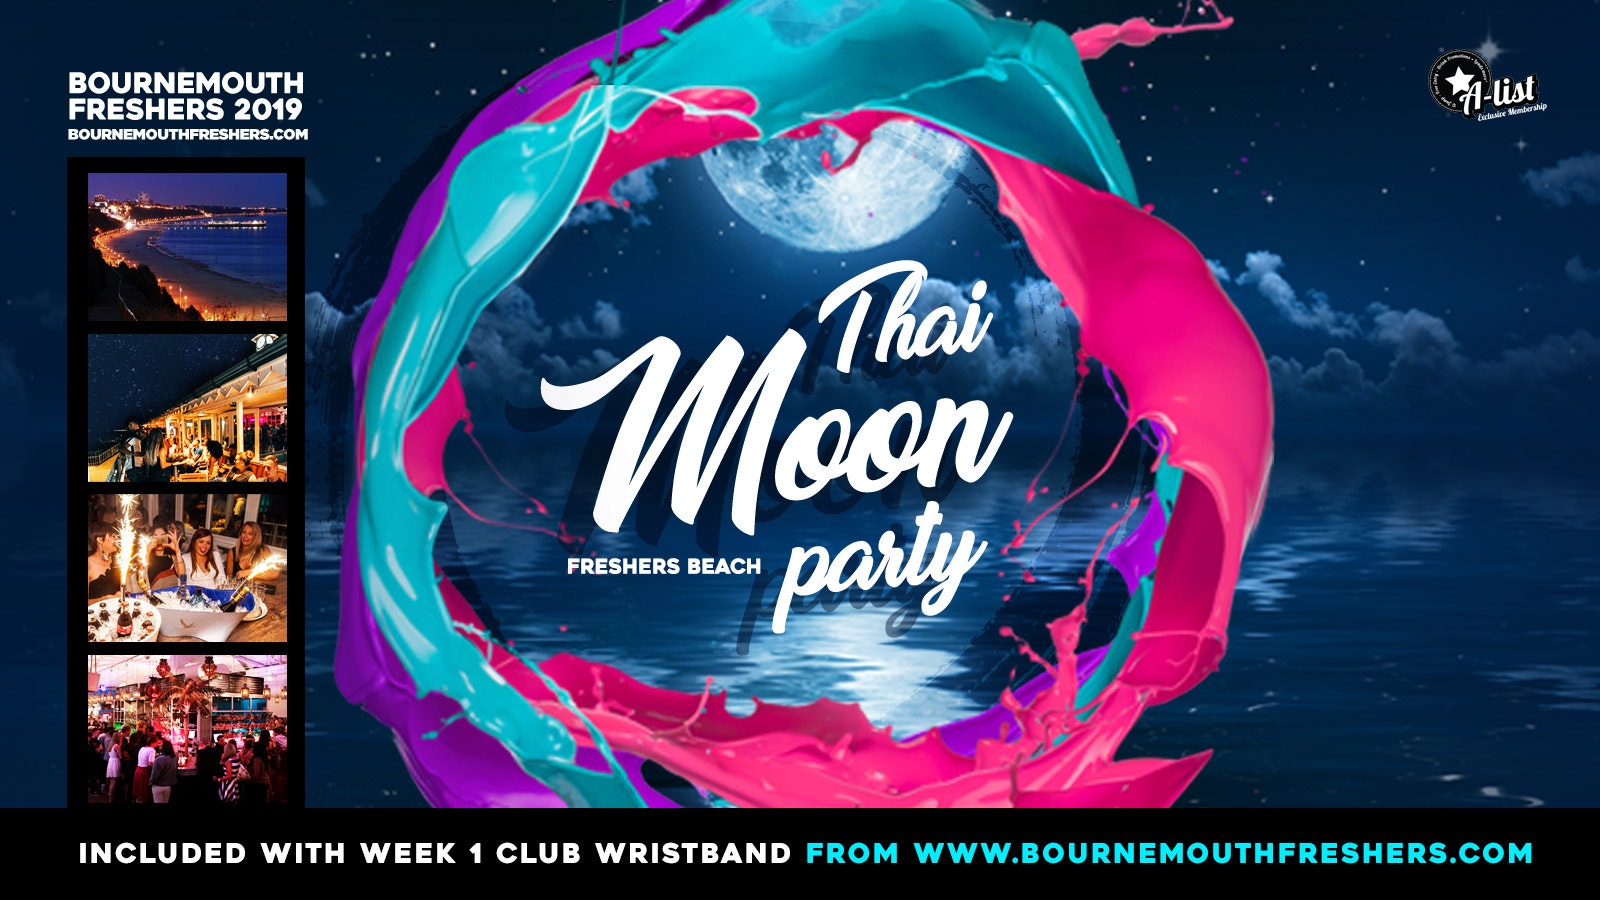 Freshers Thai Moon Beach Party at Aruba // Bournemouth Freshers 2019